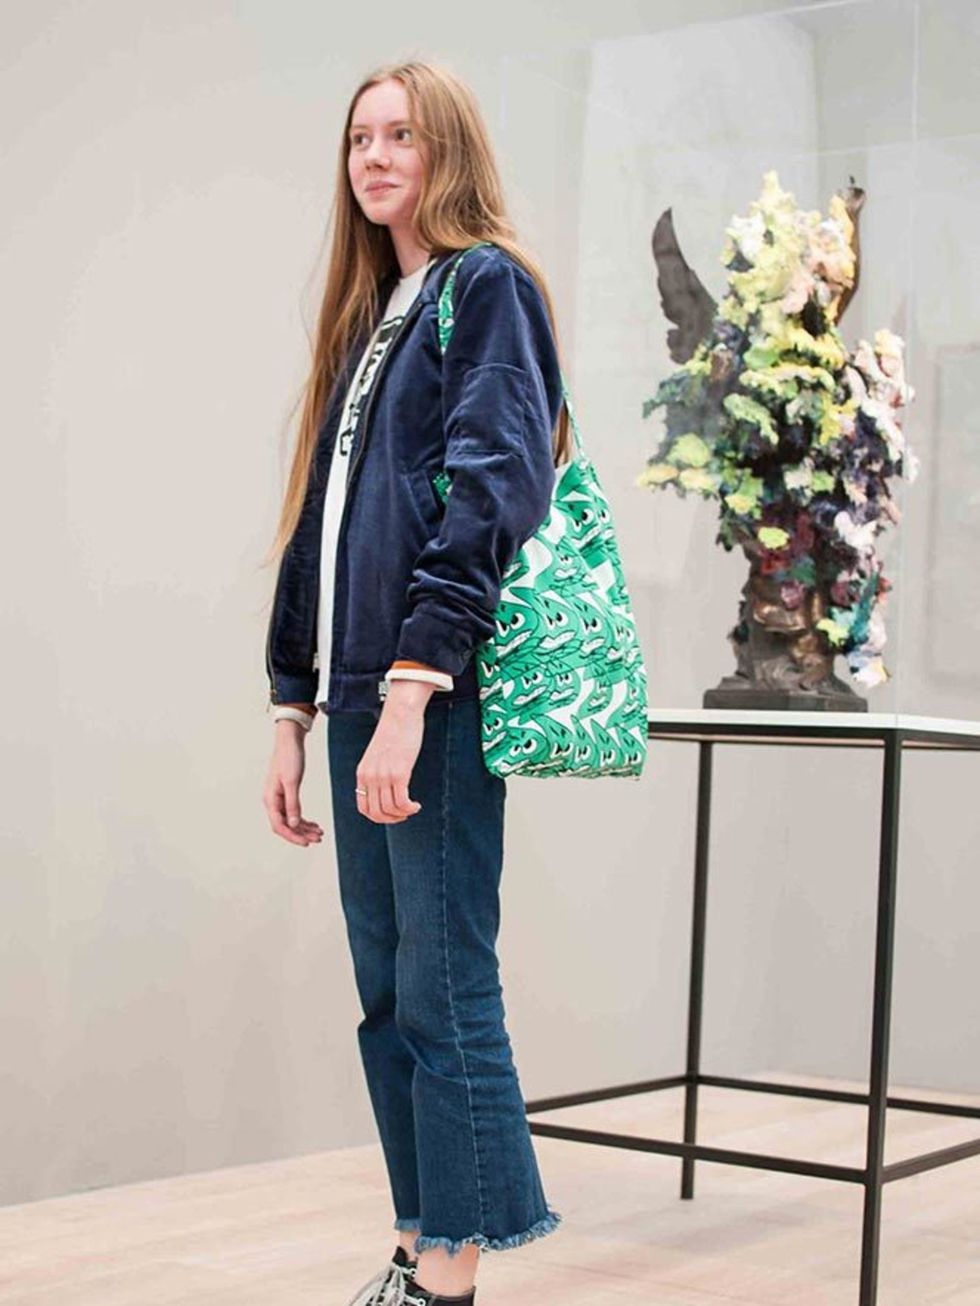 Isobel wears a Supreme jacket, Converse shoes, Zara jeans and Bernard Wilhem bag